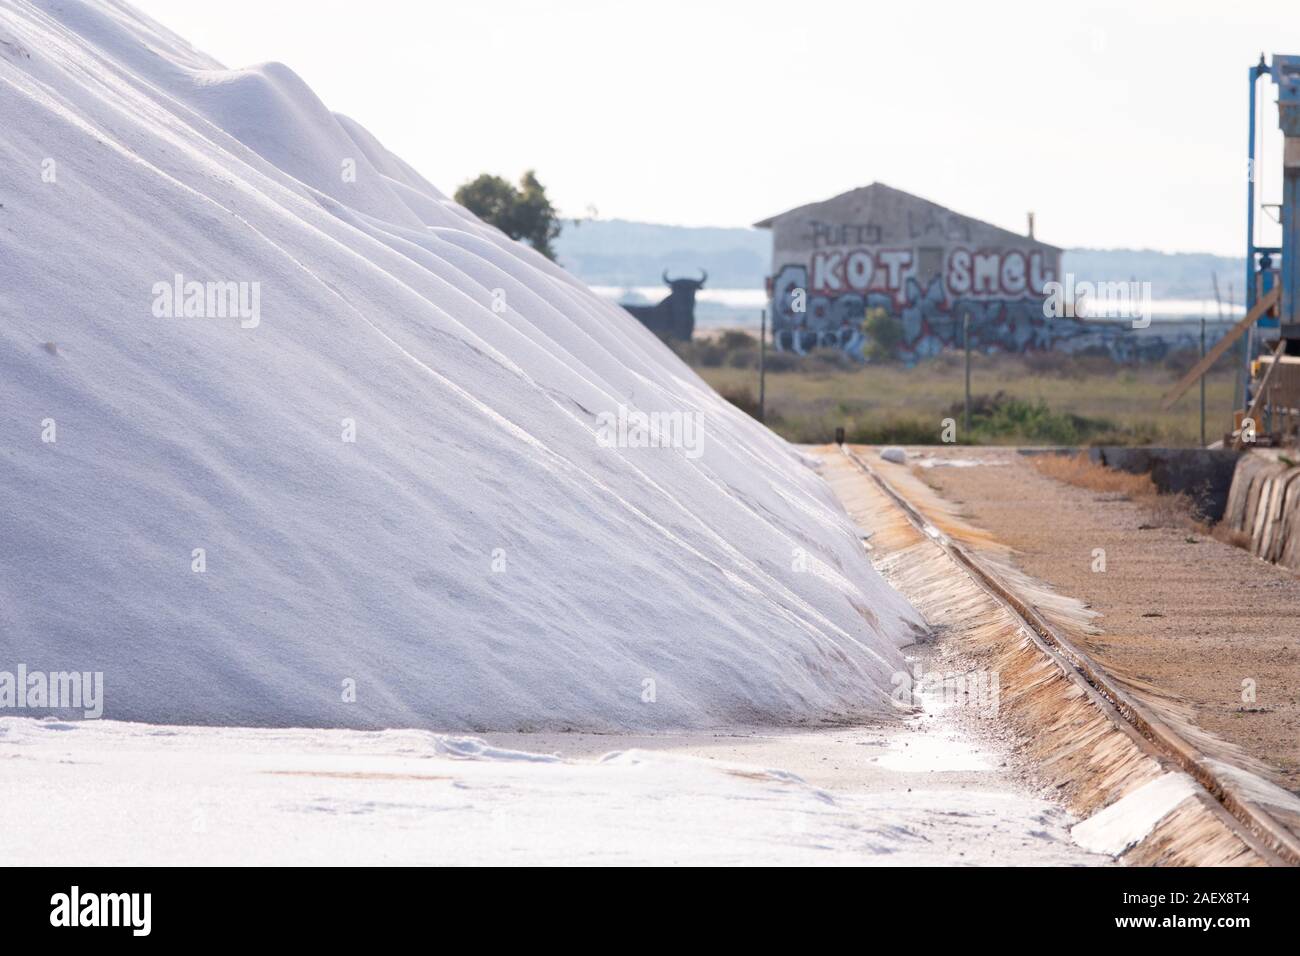 Mounds of sea salt beside the salt pans Bras del Port in Santa Pola, Spain  Stock Photo - Alamy